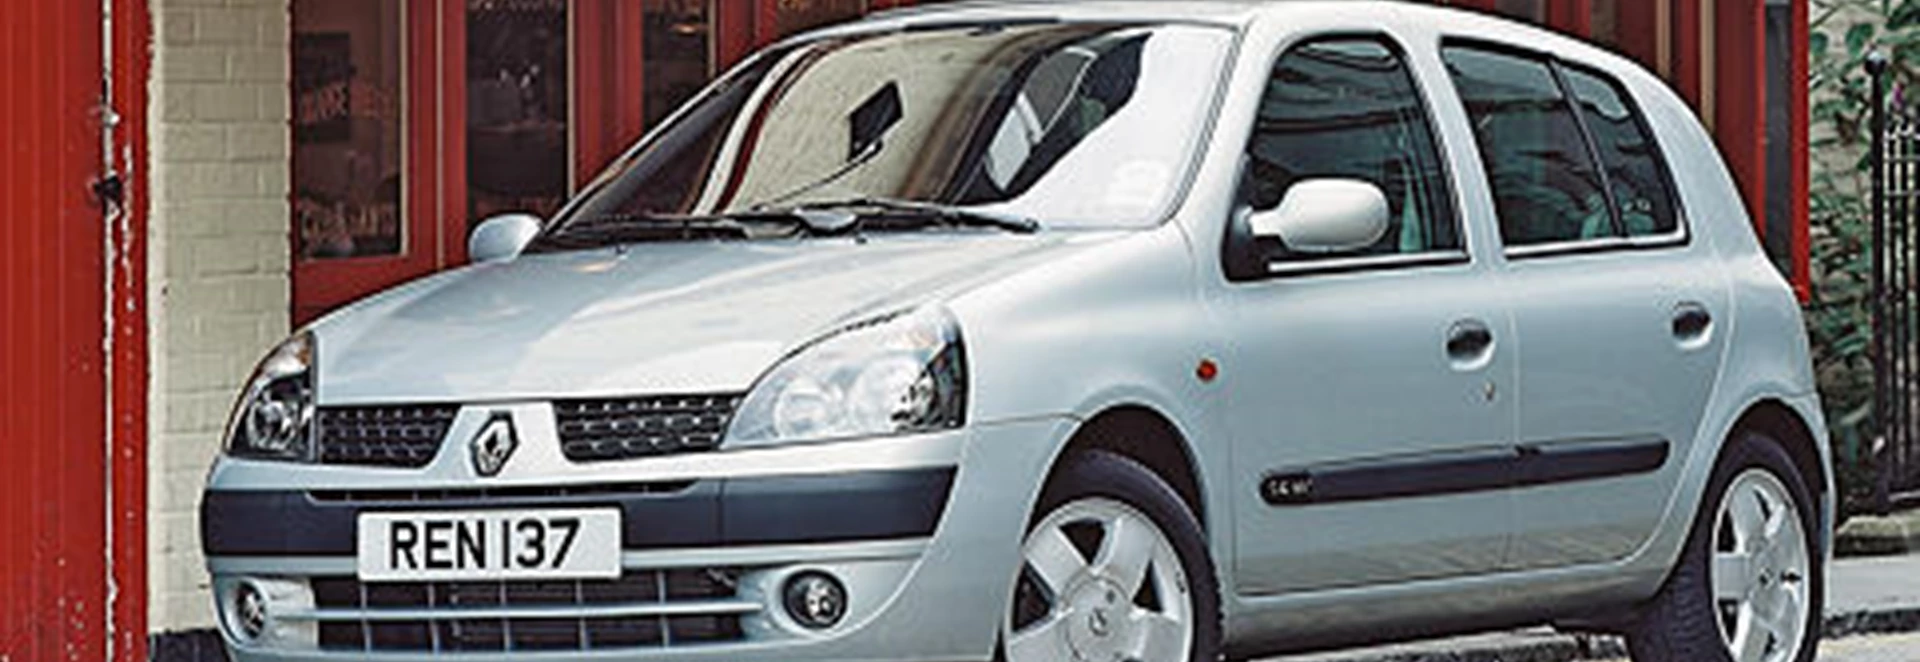 Renault Clio 1.5 dCi Expression (2001) 